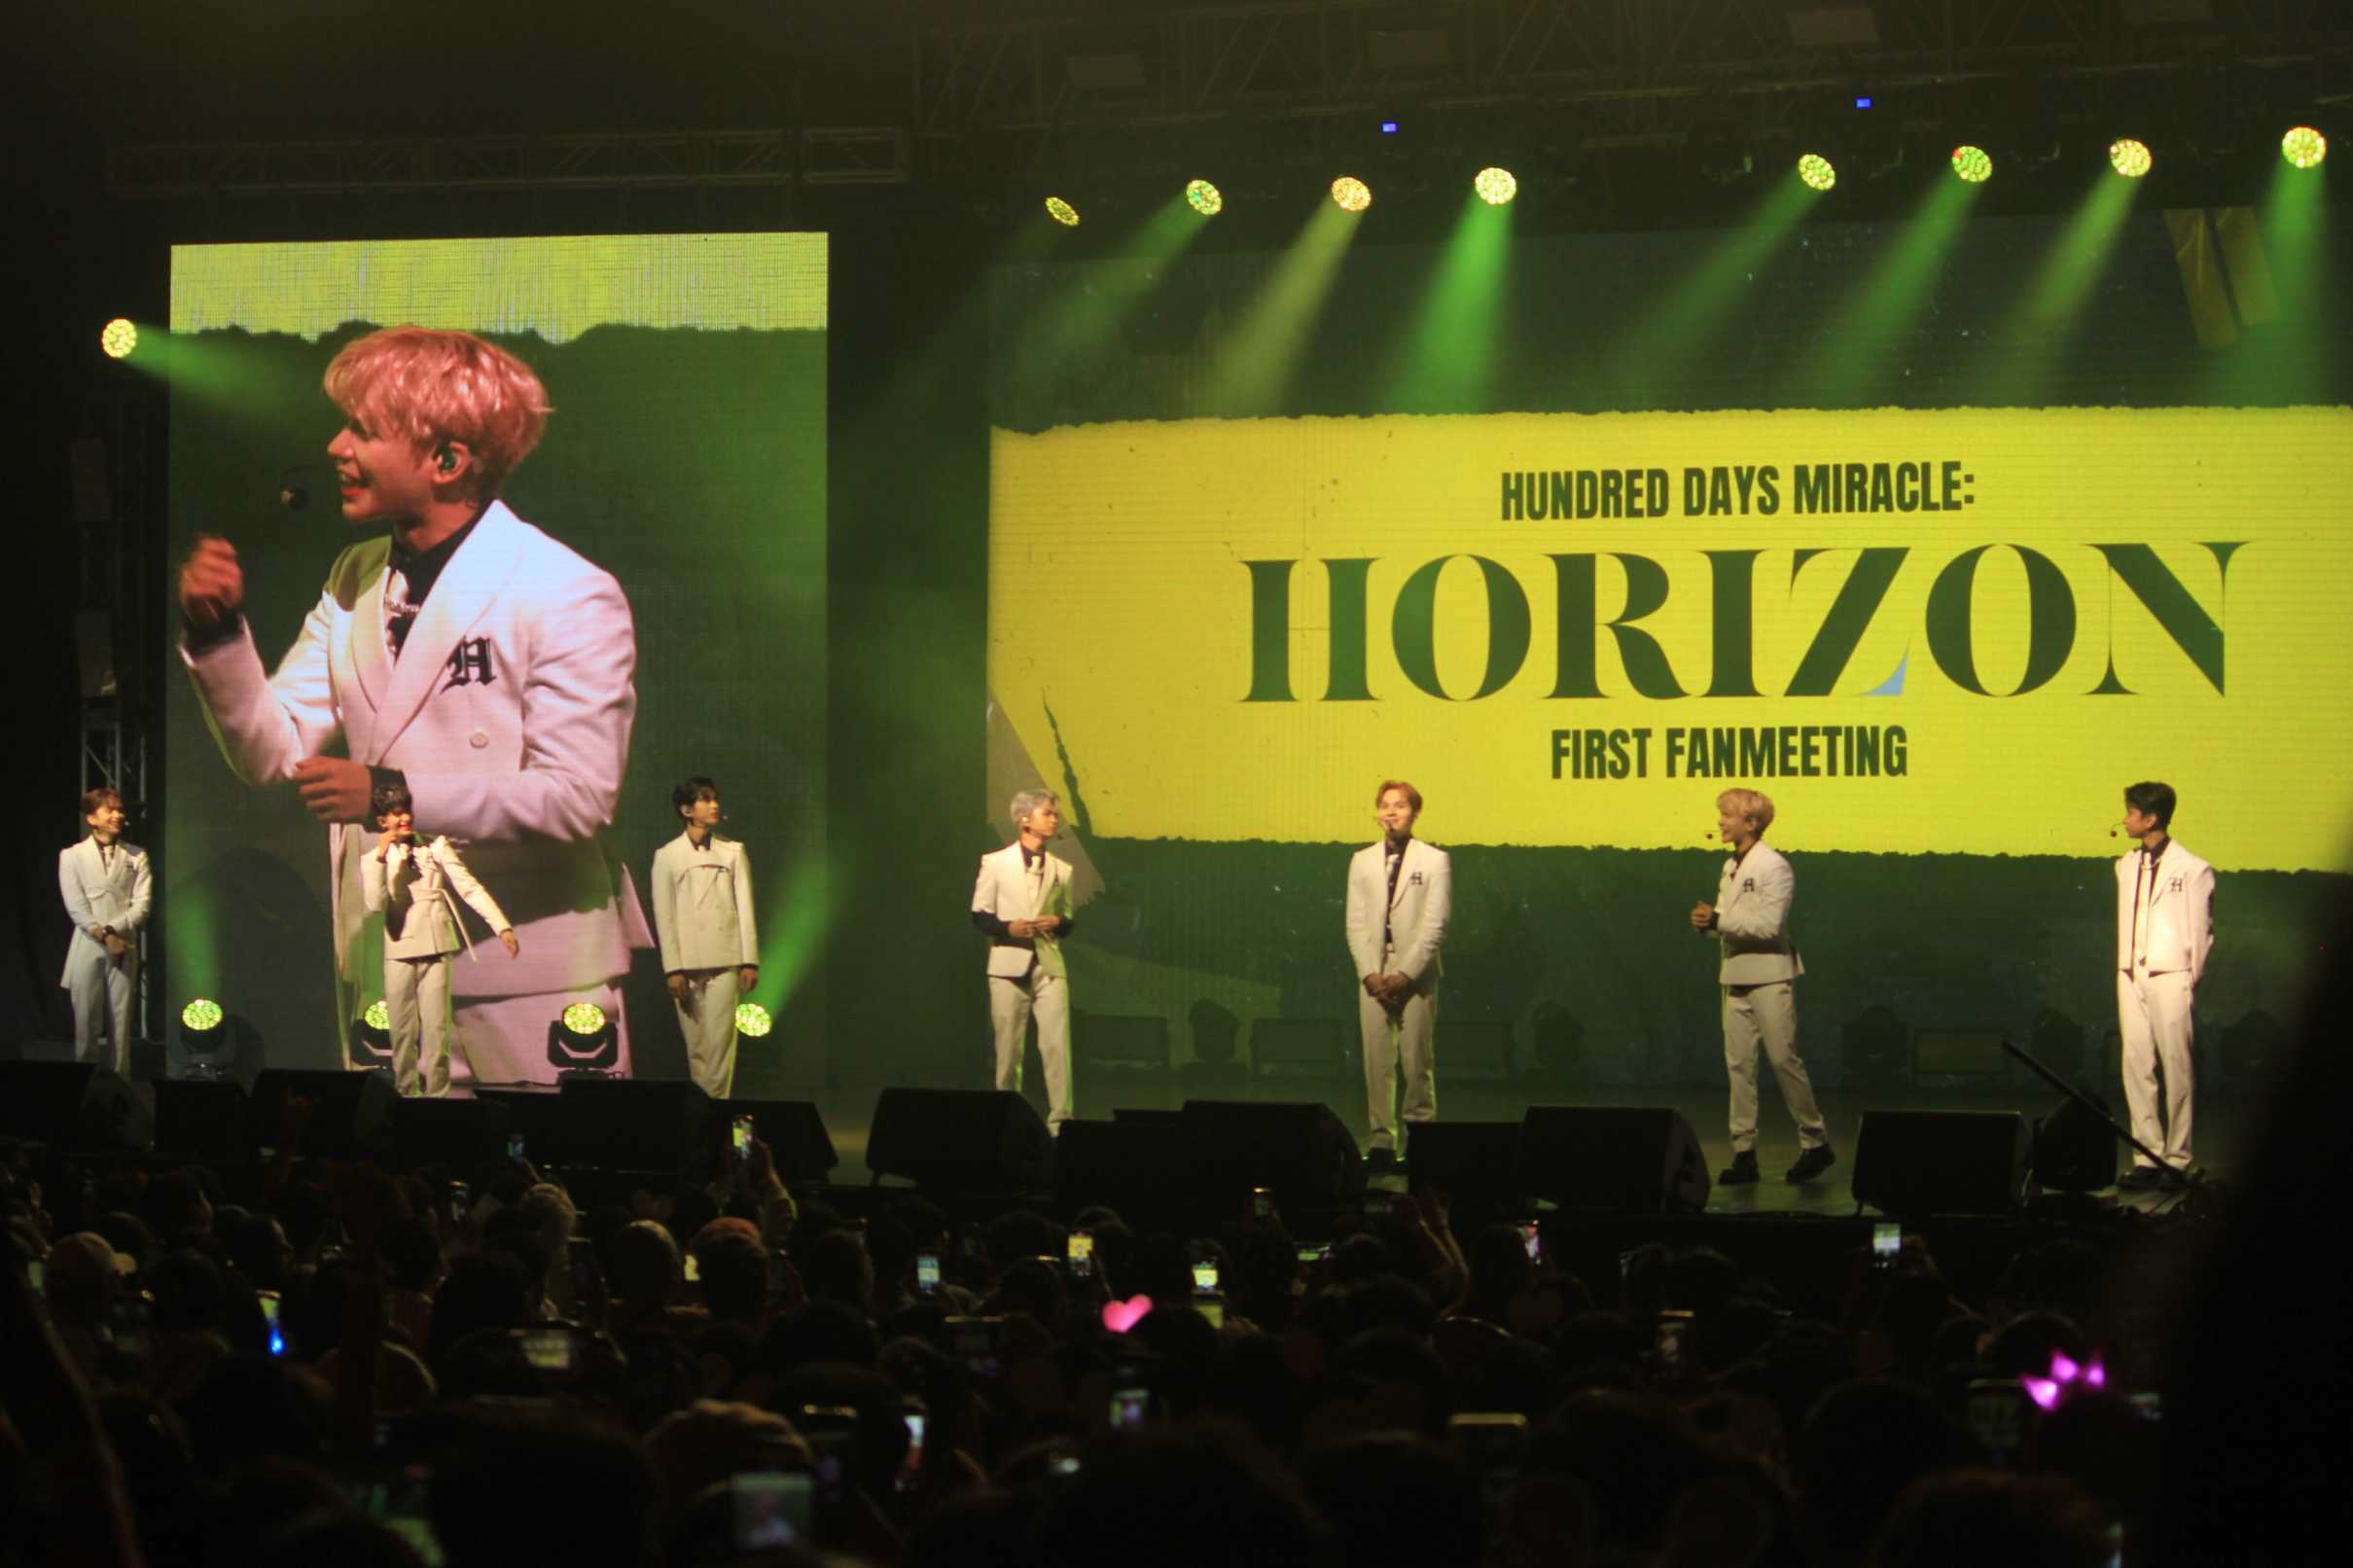 Hori7on meets 'Anchors' during heartwarming fan meeting